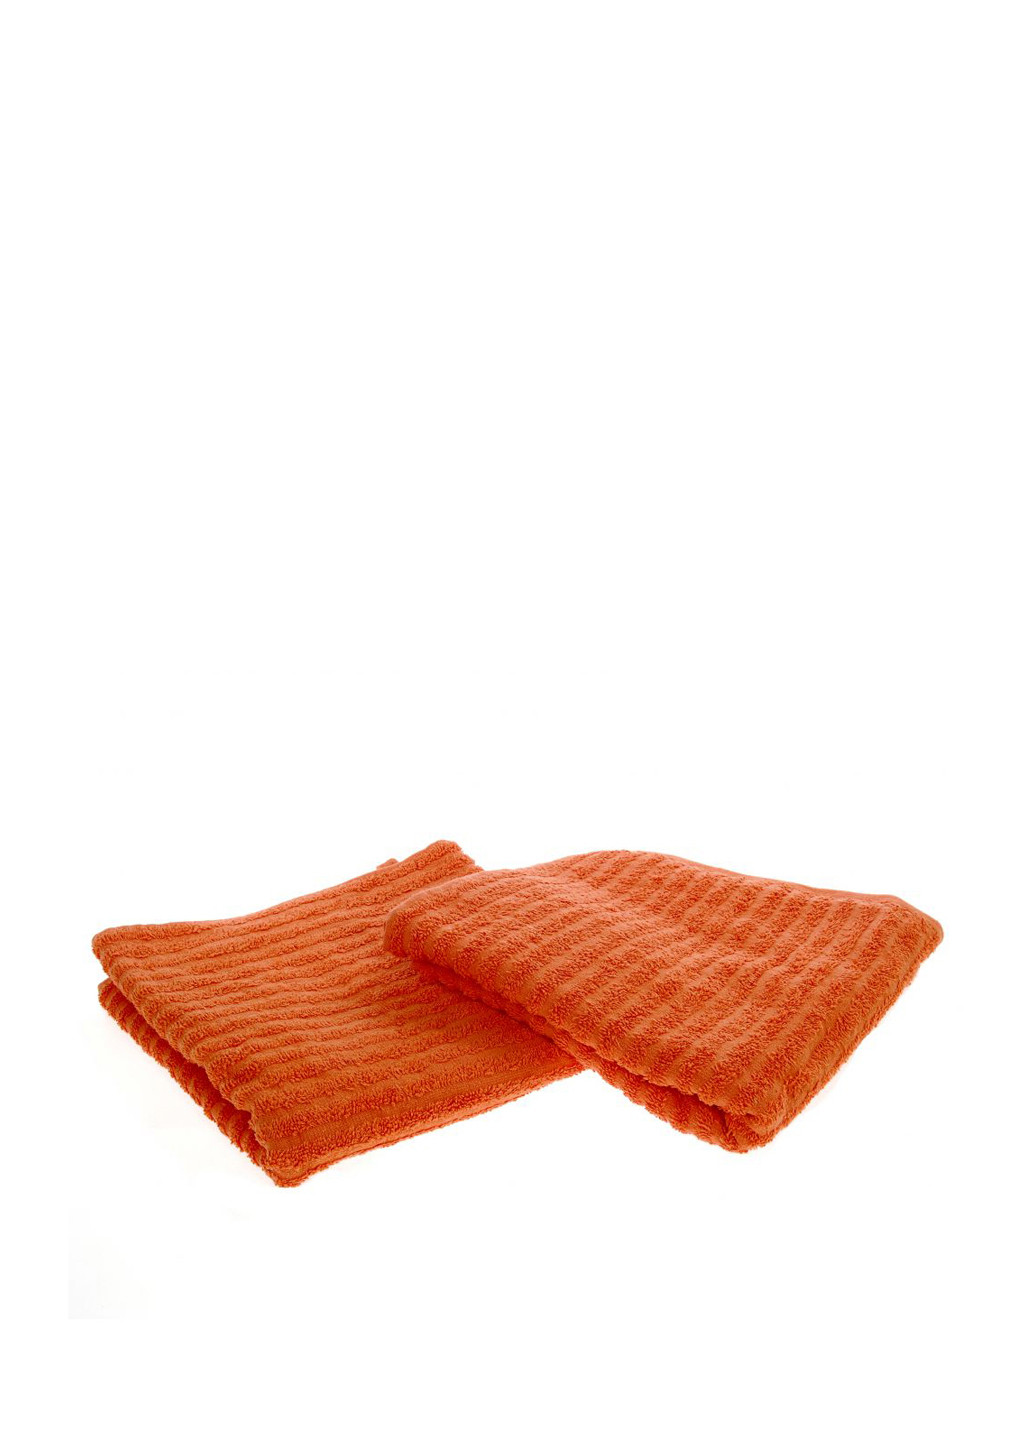 Miomare полотенце (2 шт.), 50 х 100 см однотонный оранжевый производство - Германия